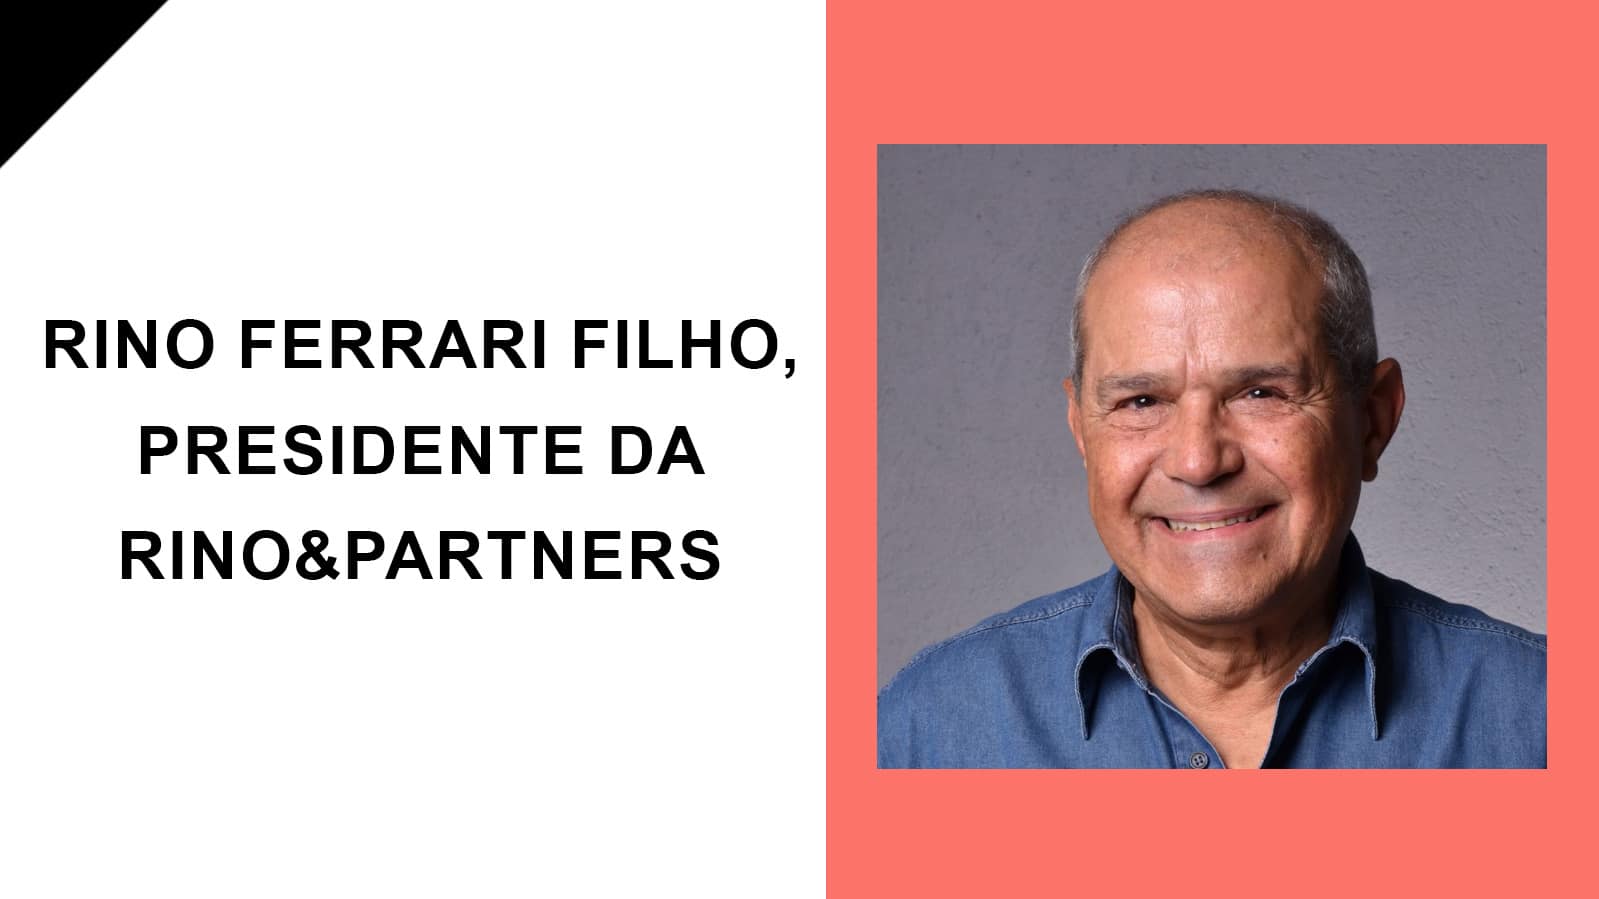 Raul entrevista Rino Ferrari Filho, Presidente da Rino&Partners